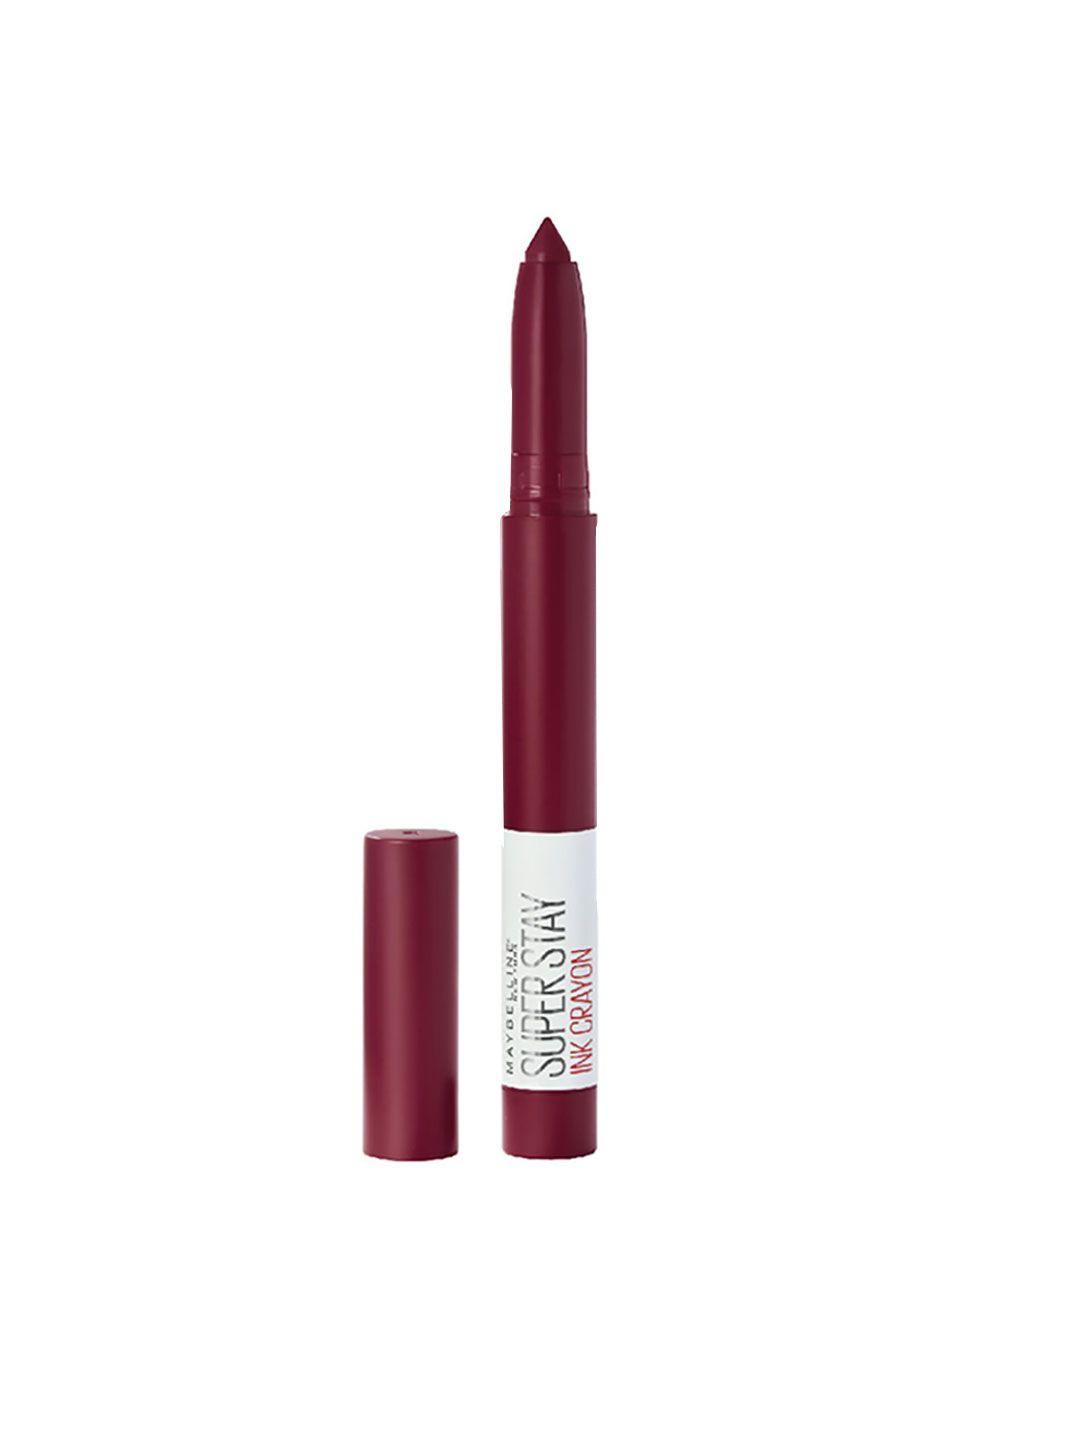 maybelline new york superstay matte ink crayon lipstick - make it happen 55